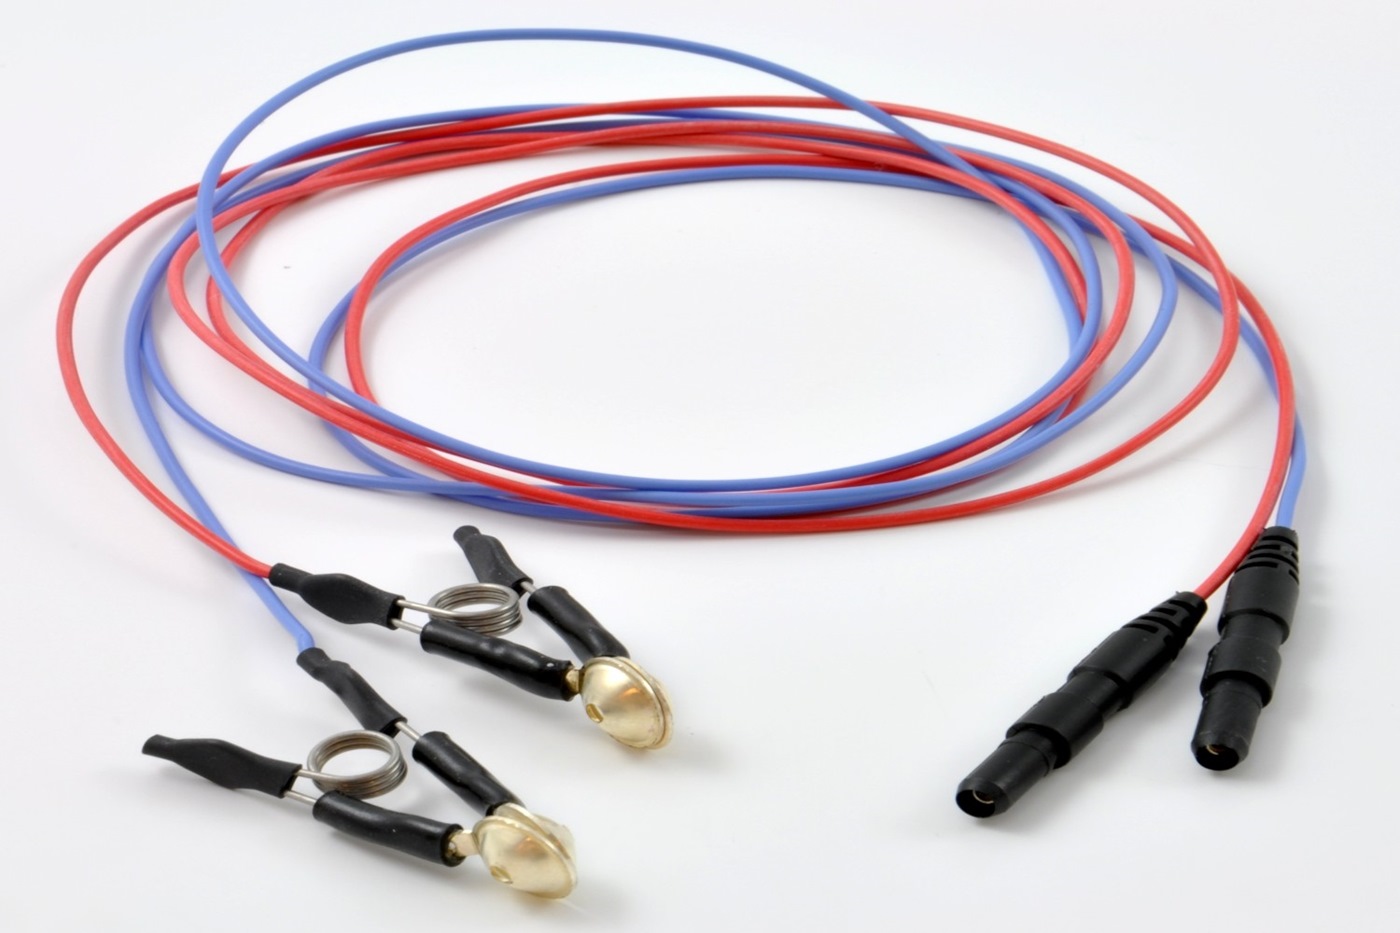 Sábana cristal escribir una carta Electrode Ear Clip with DIN connector, Silver, 10mm, 1 meter cable. (2 pcs)  - 019-405100